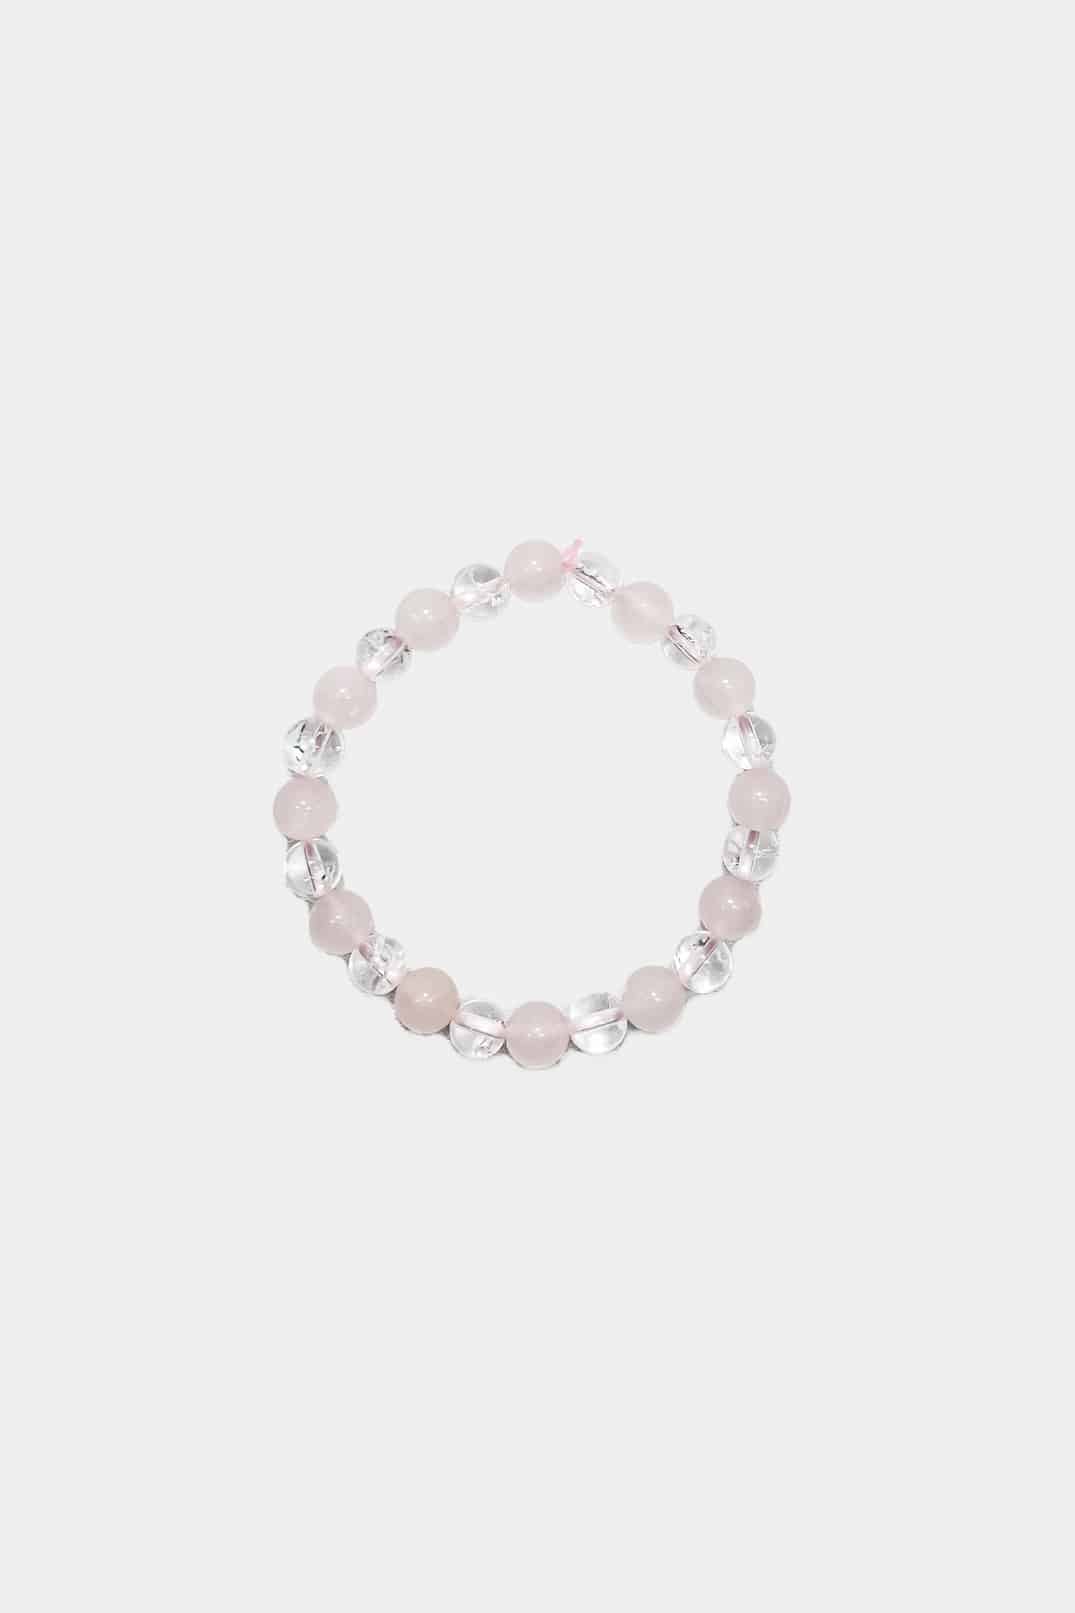 Kids gemstone bracelet rose quartz/crystal quartz